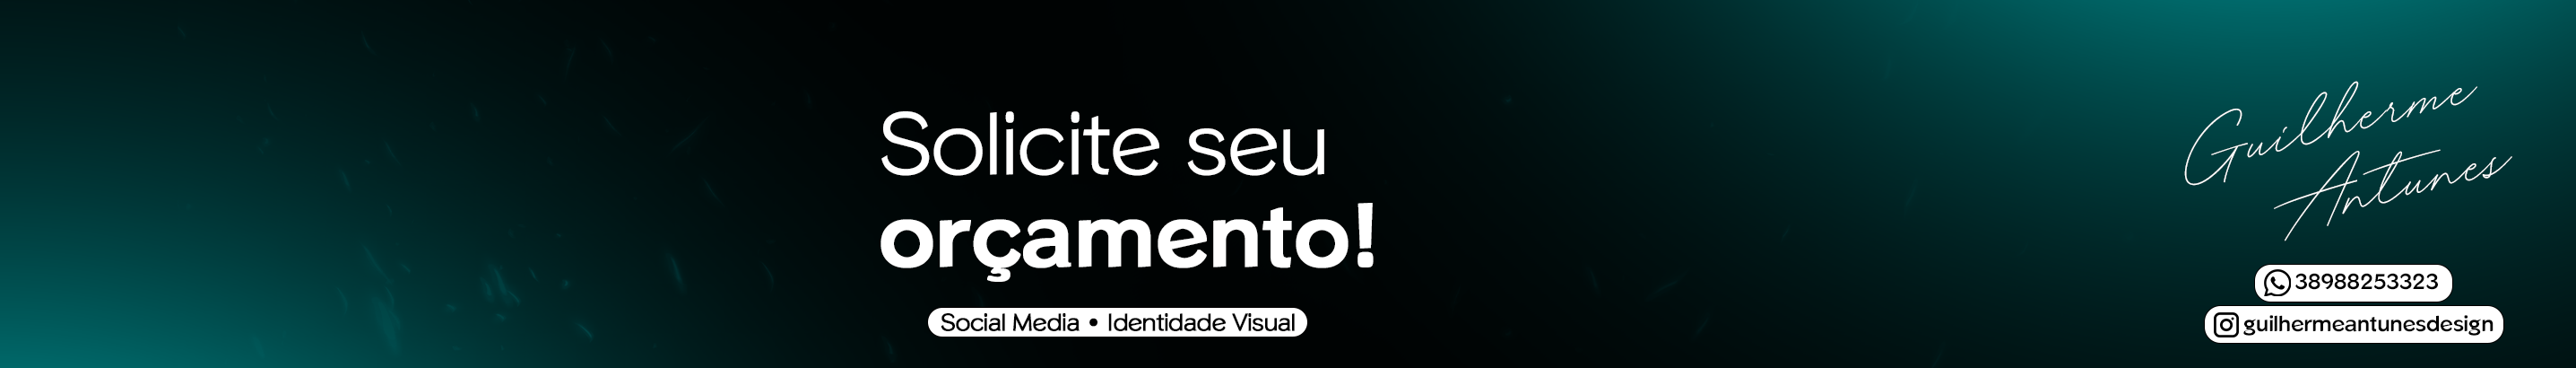 Guilherme Antunes's profile banner